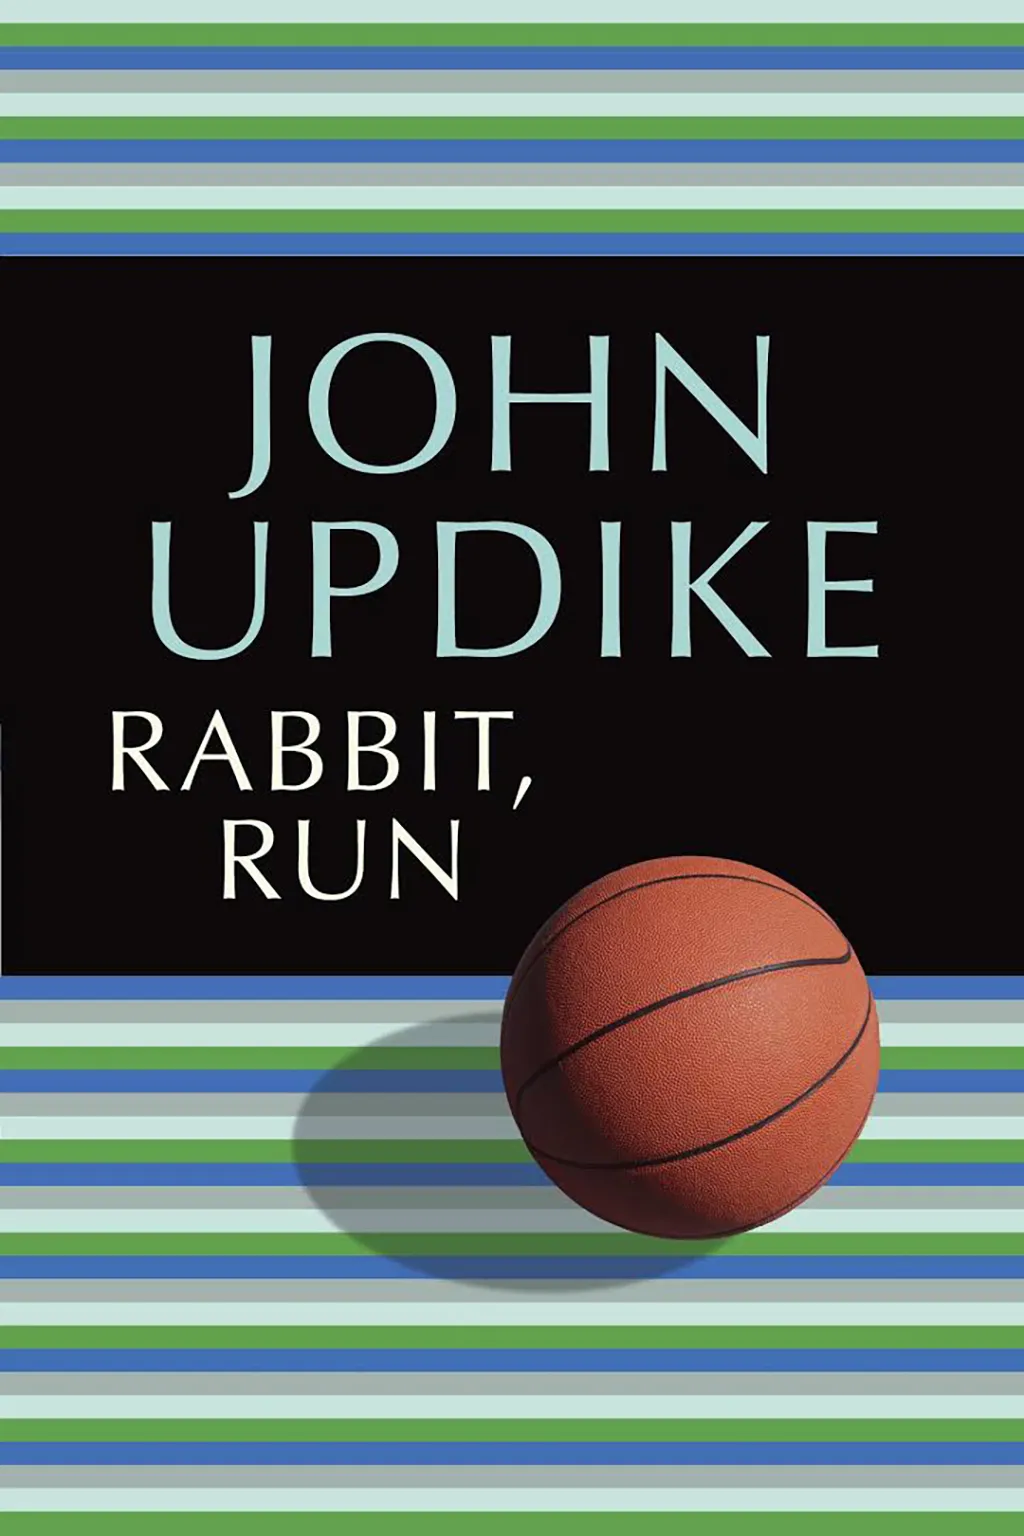 rabbit, run, books every man should read